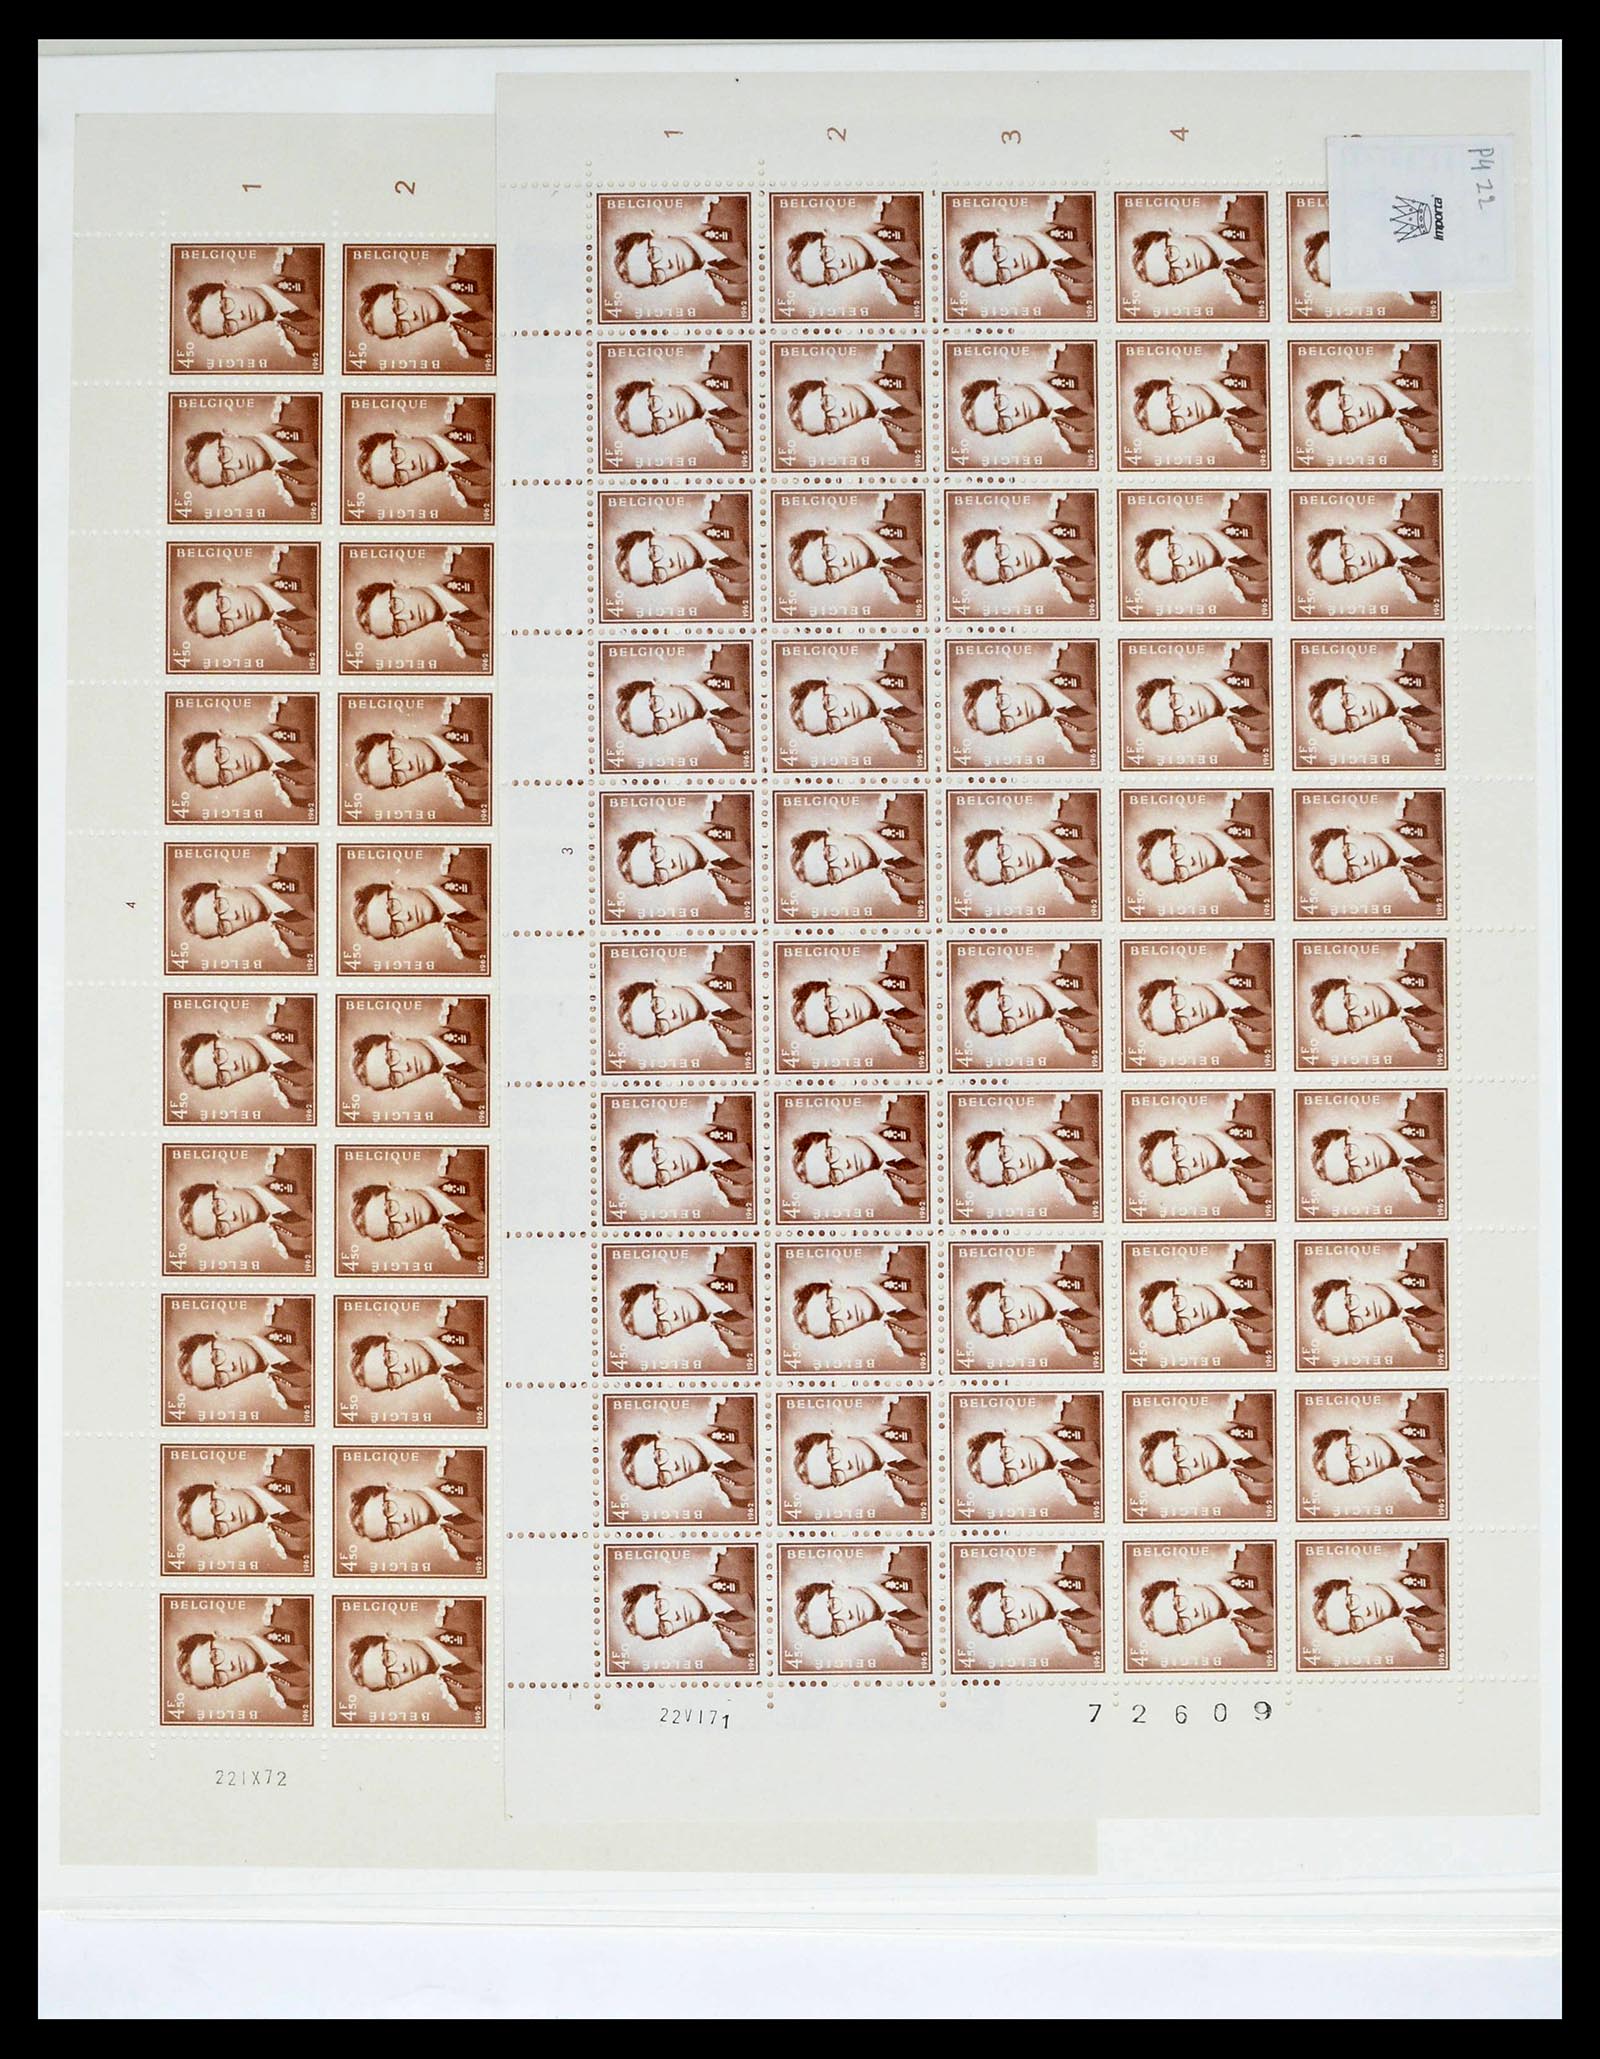 39229 0040 - Stamp collection 39229 Belgium Boudewijn with glasses 1952-1975.